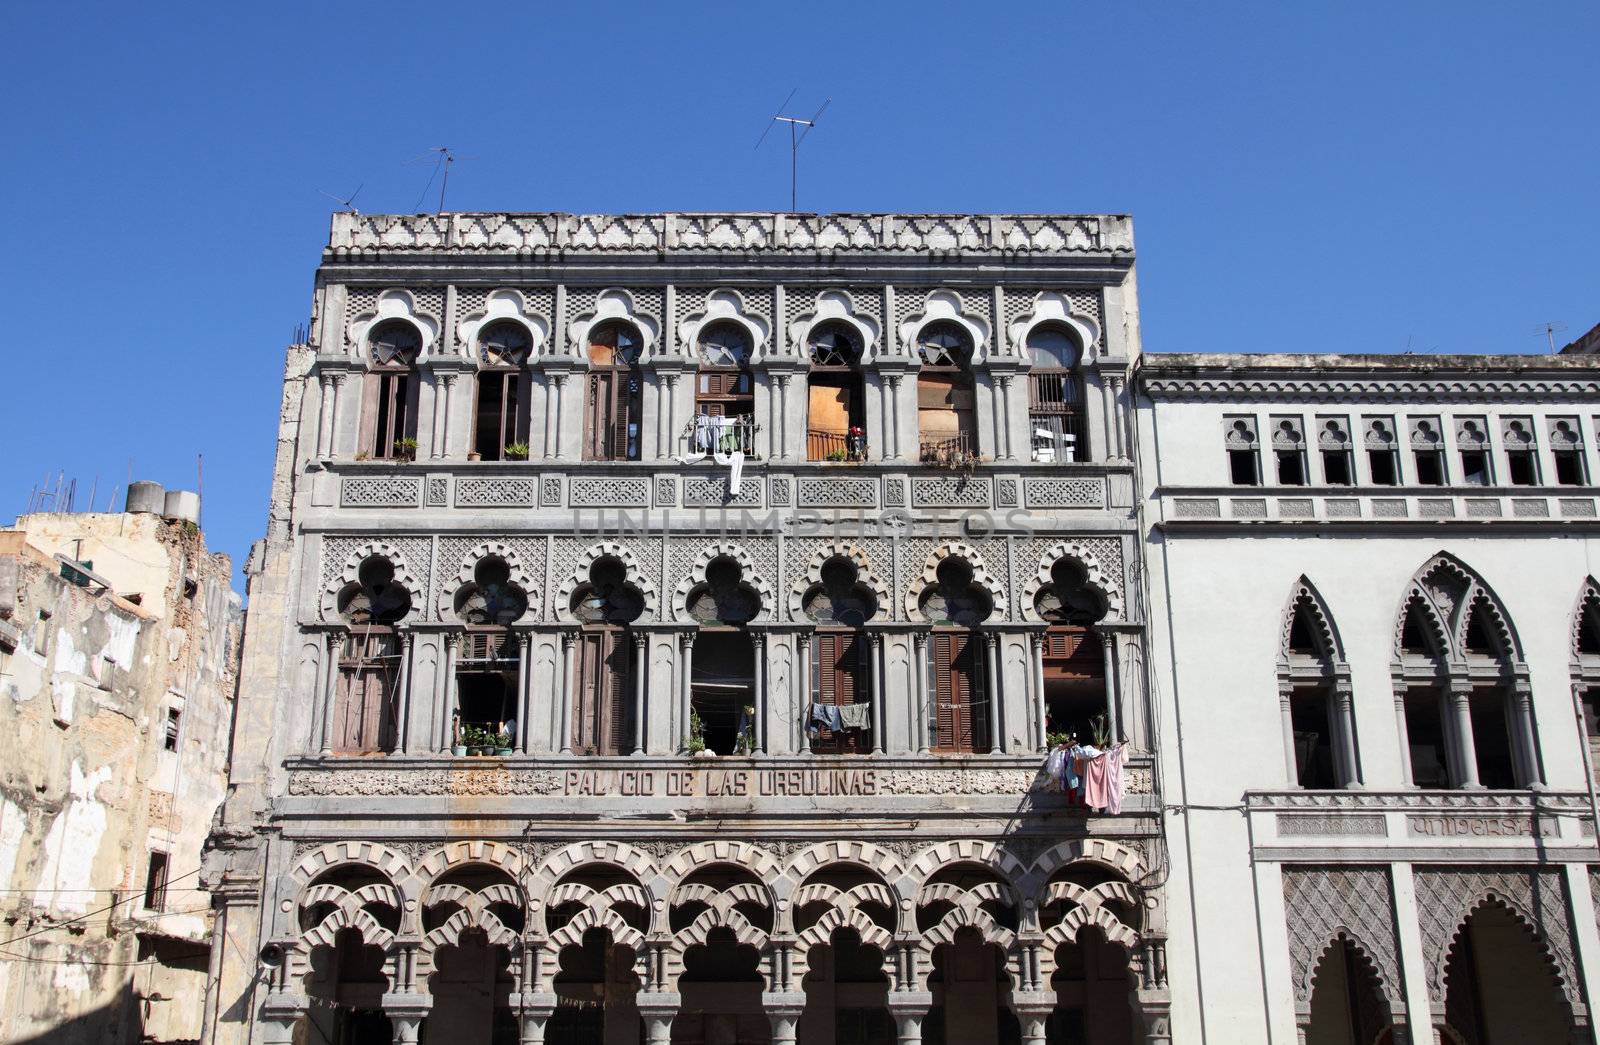 Havana, Cuba - city architecture. Ursulinas palace in Arabic style.